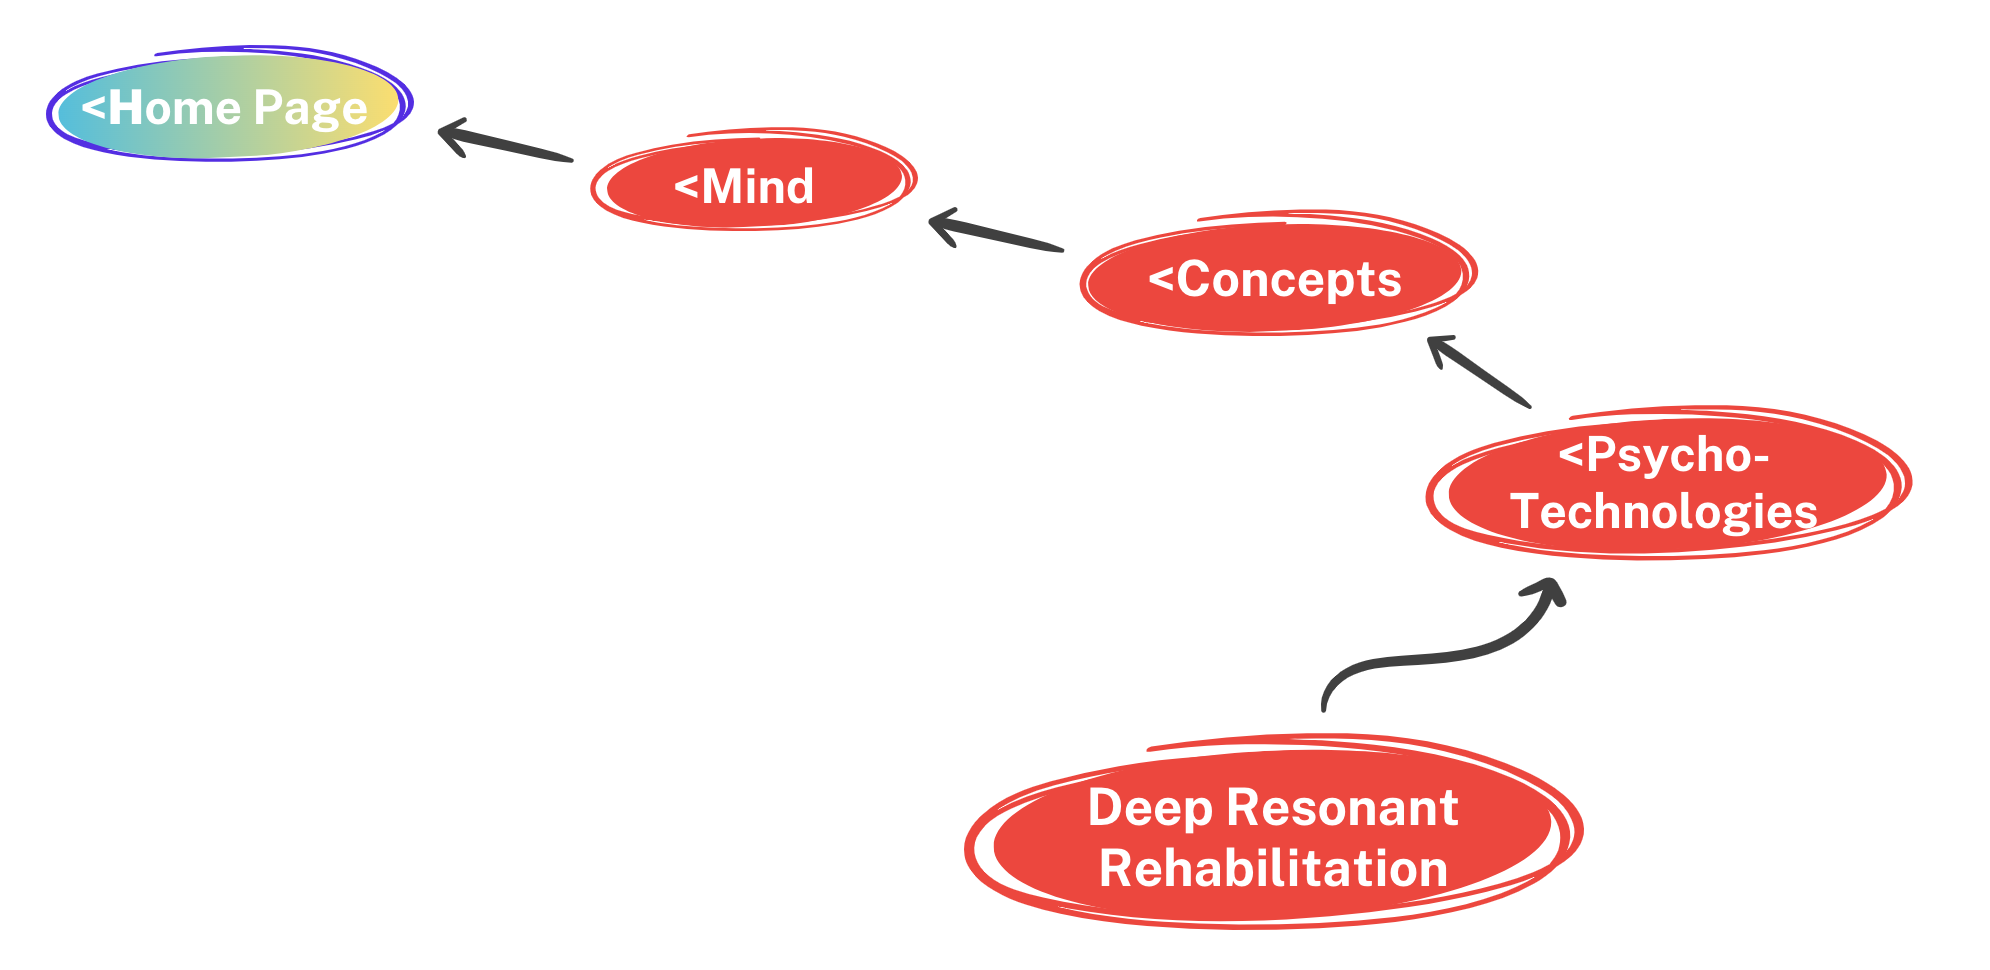 Deep Resonant Rehabilitation